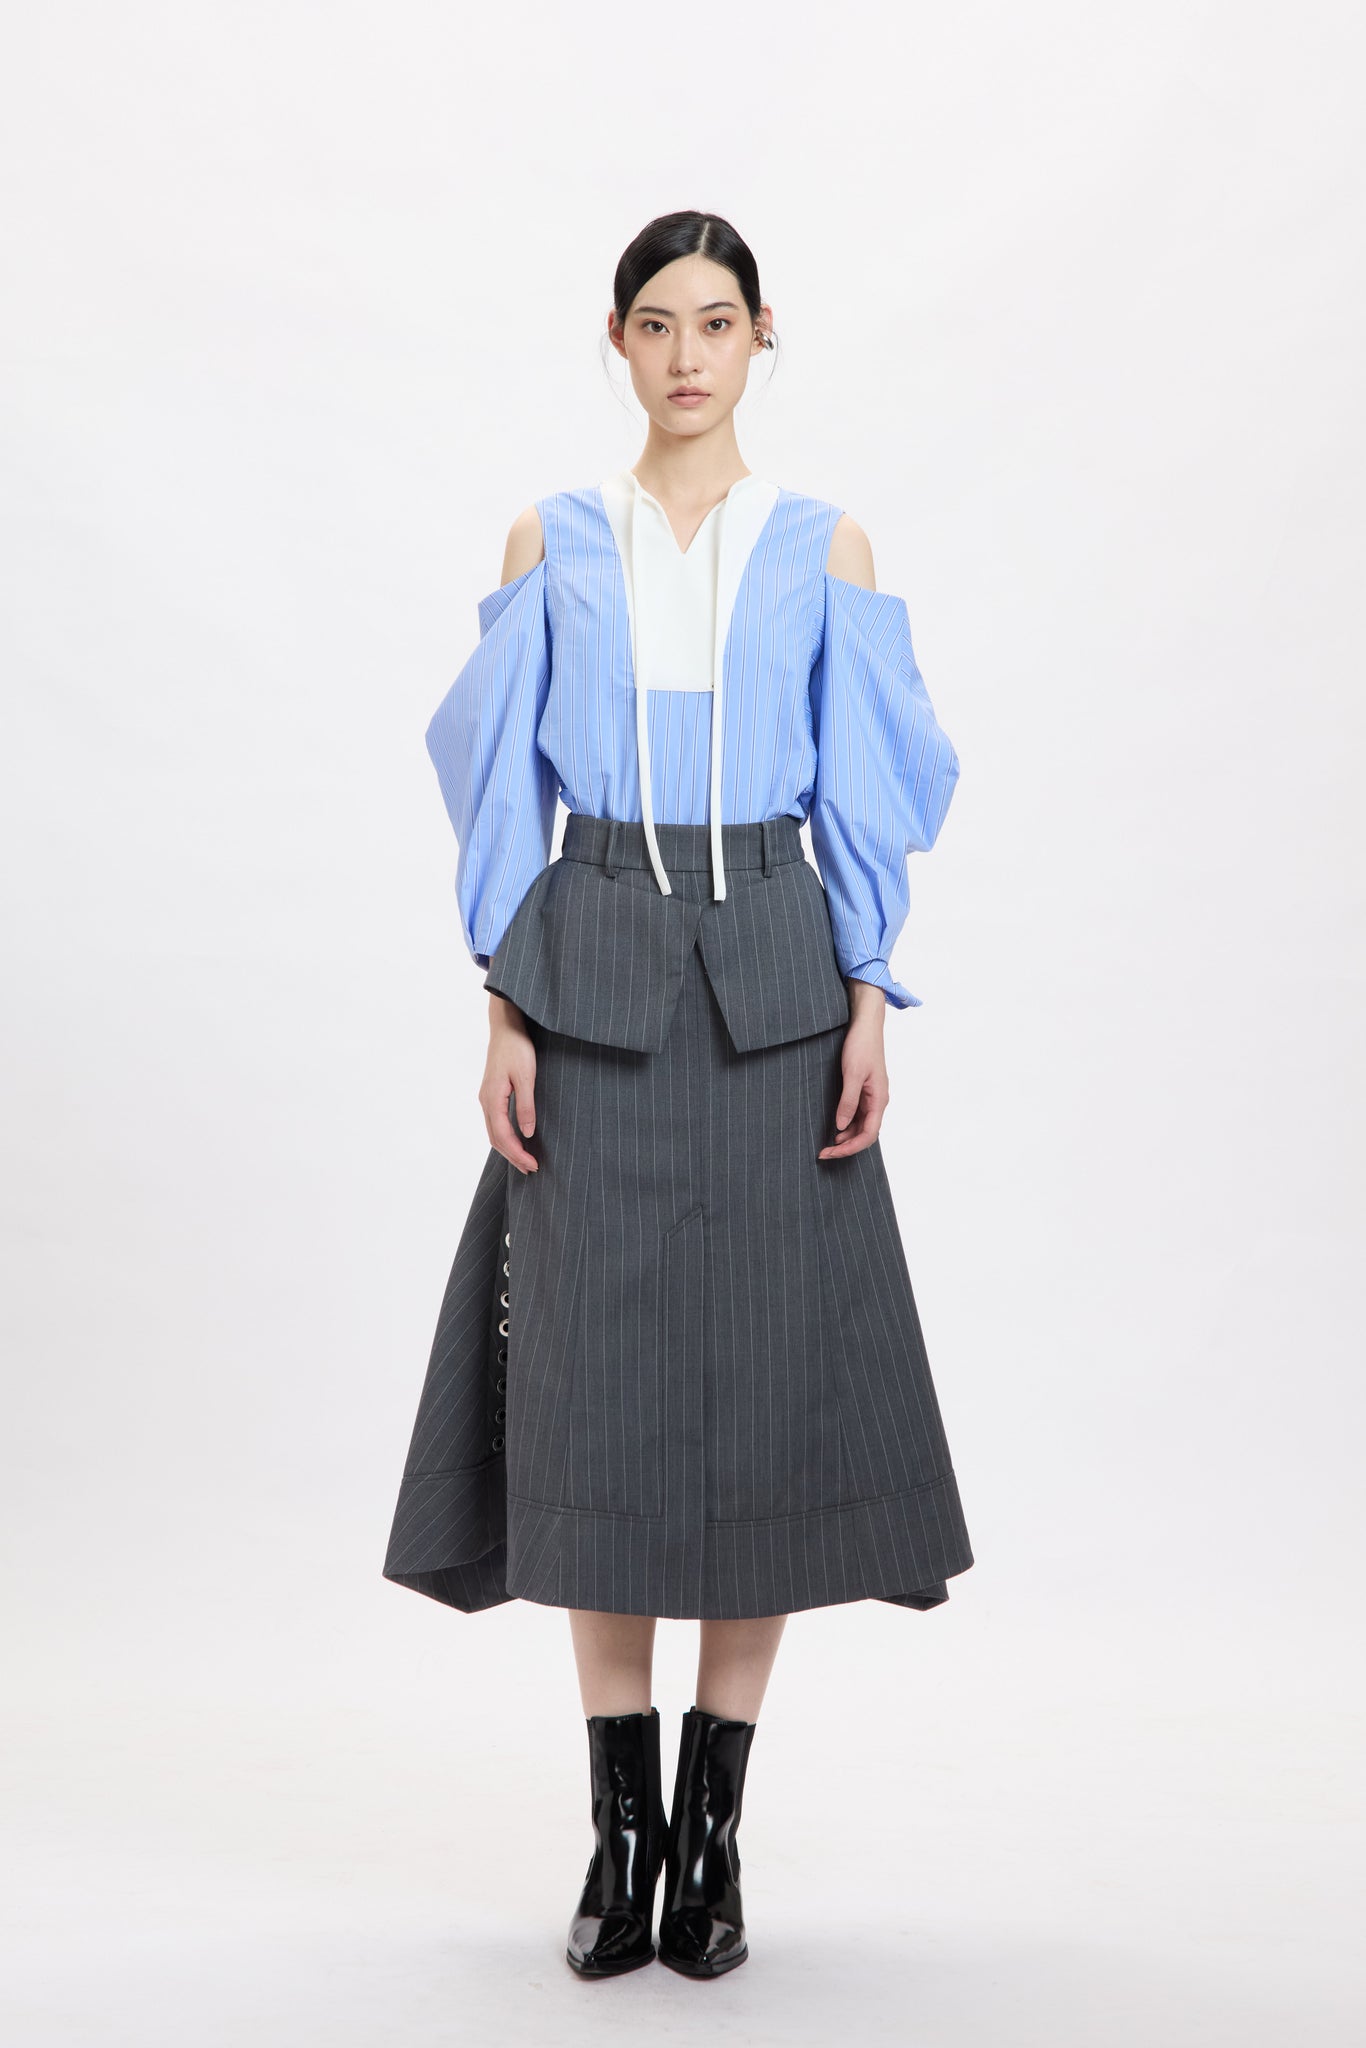 Peplum Suiting Skirt